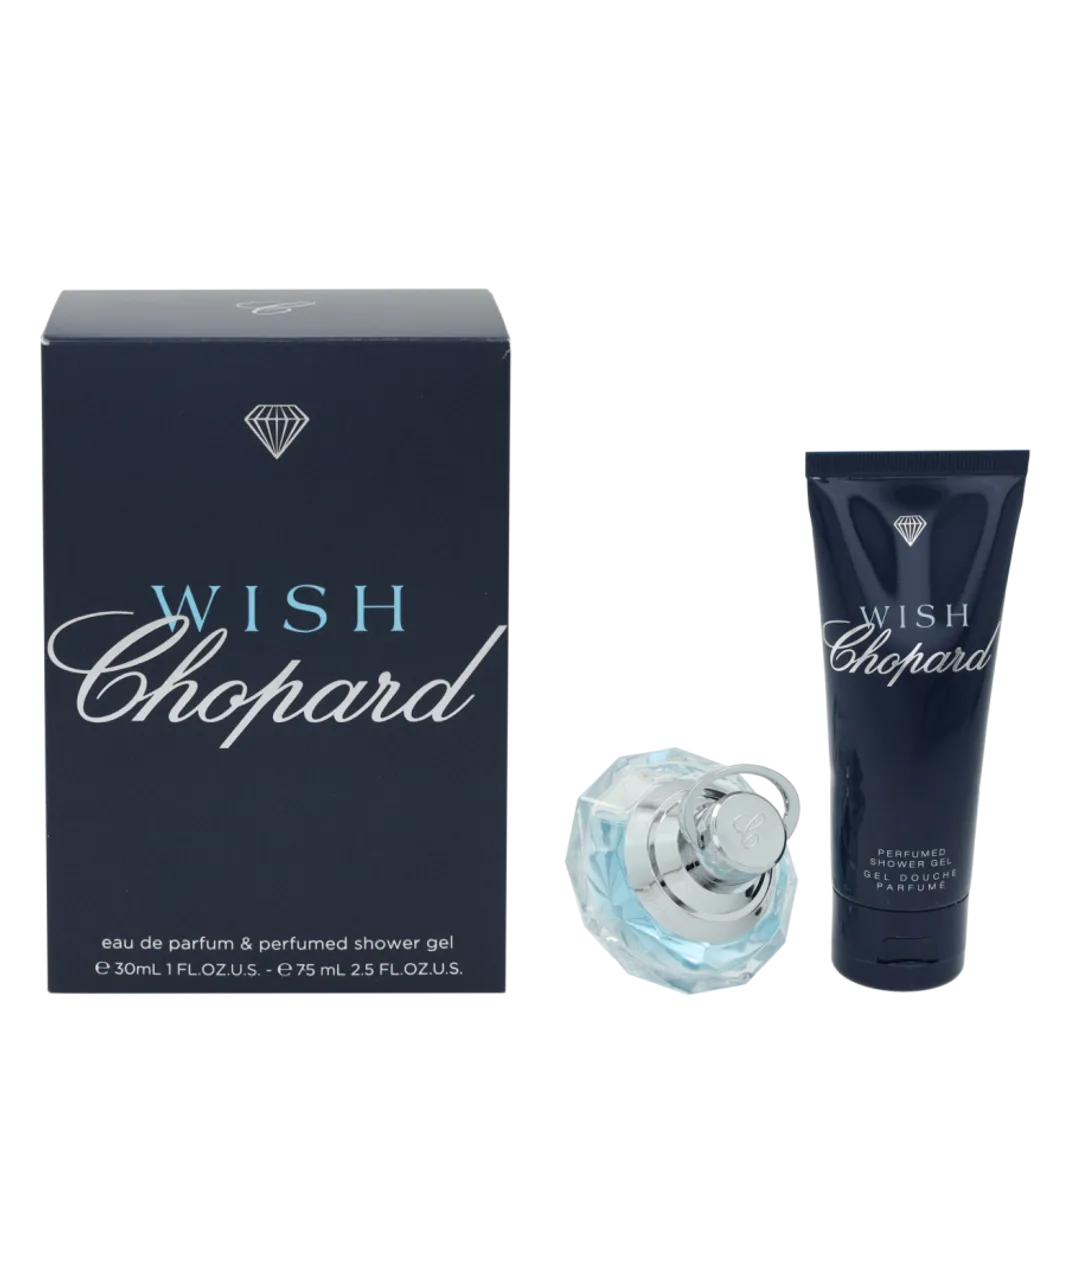 Chopard Womens Wish Eau de Parfum 30ml + Shower Gel 75ml Gift Set - One Size